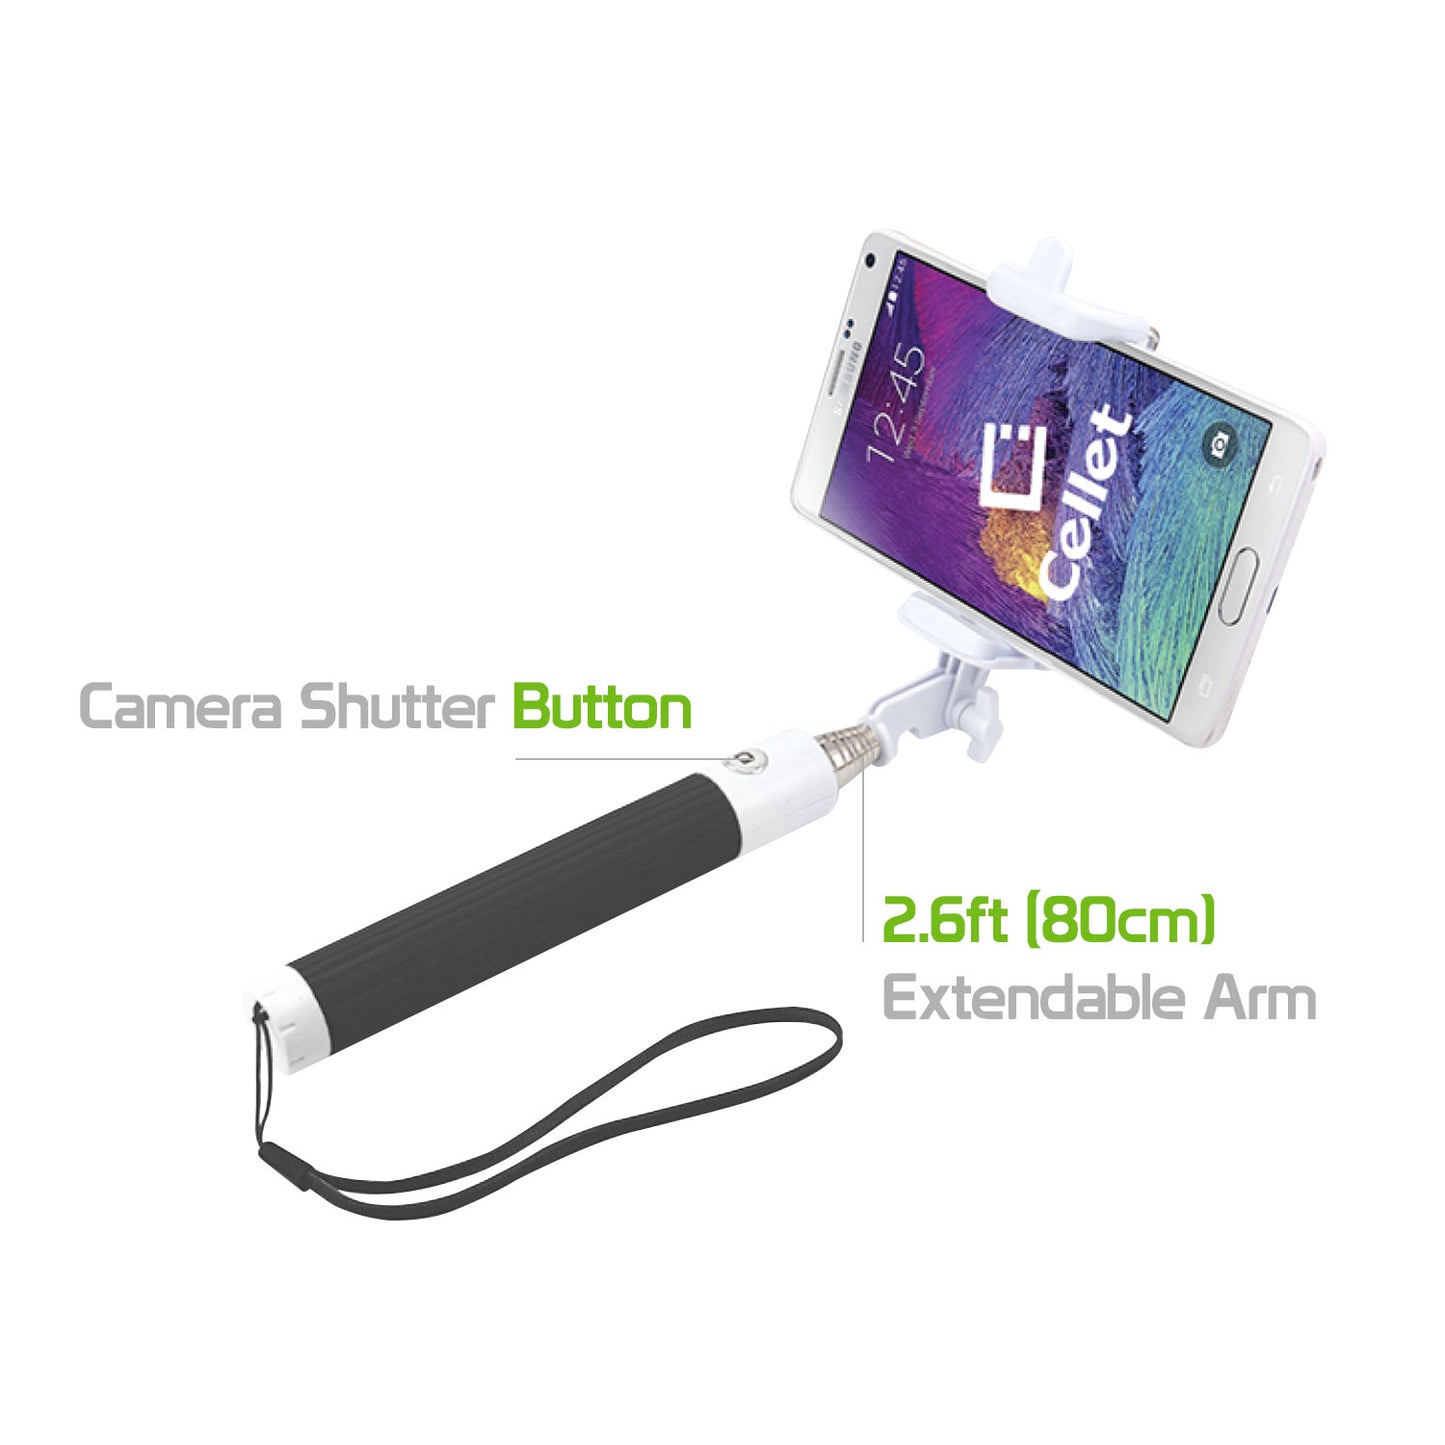 ACPOD4BK - Bluetooth Self-Portrait Handheld Selfie Stick for Smartphones and Cameras - Black